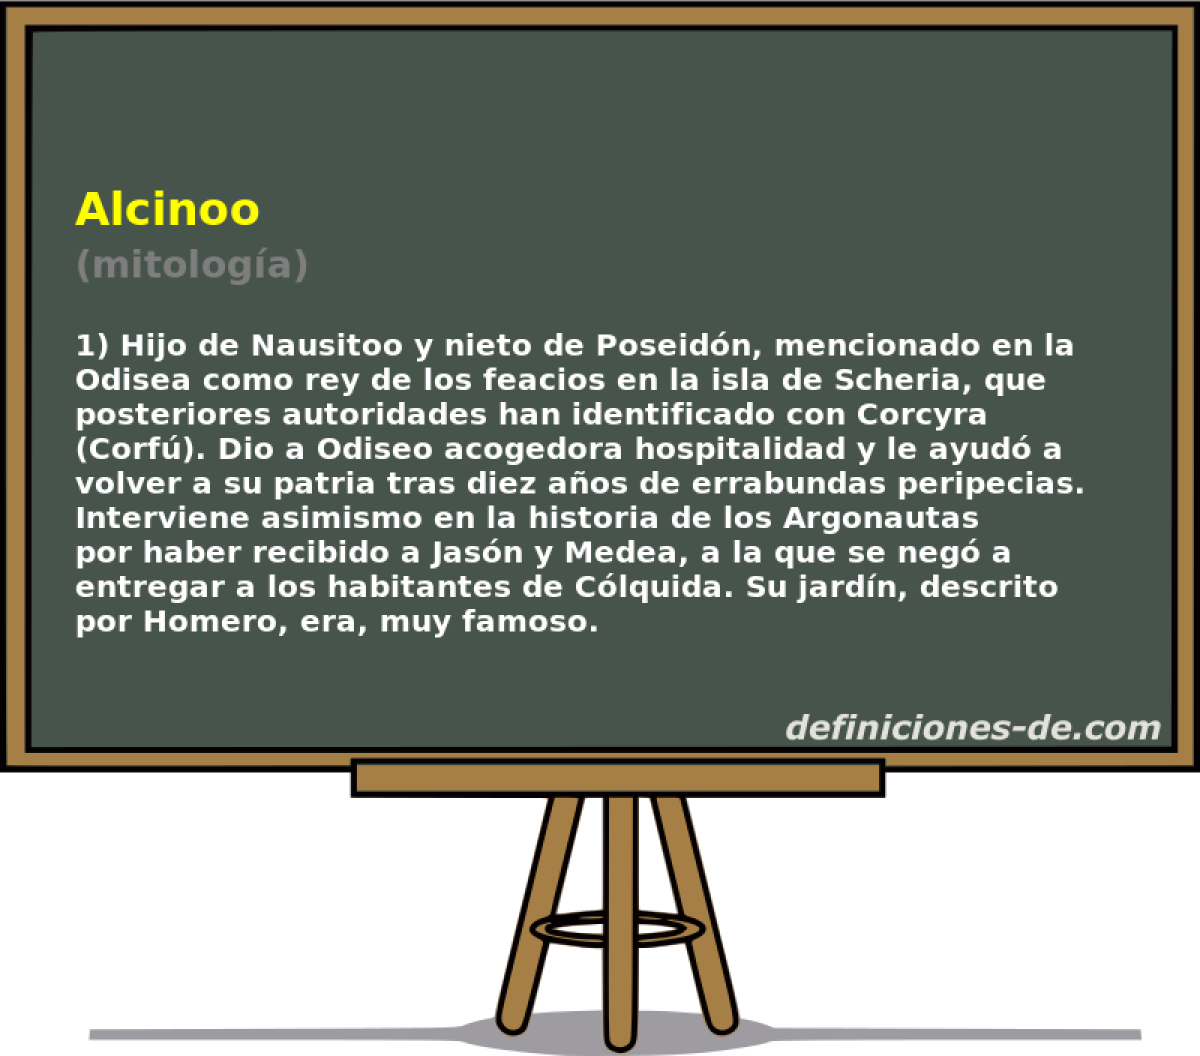 Alcinoo (mitologa)